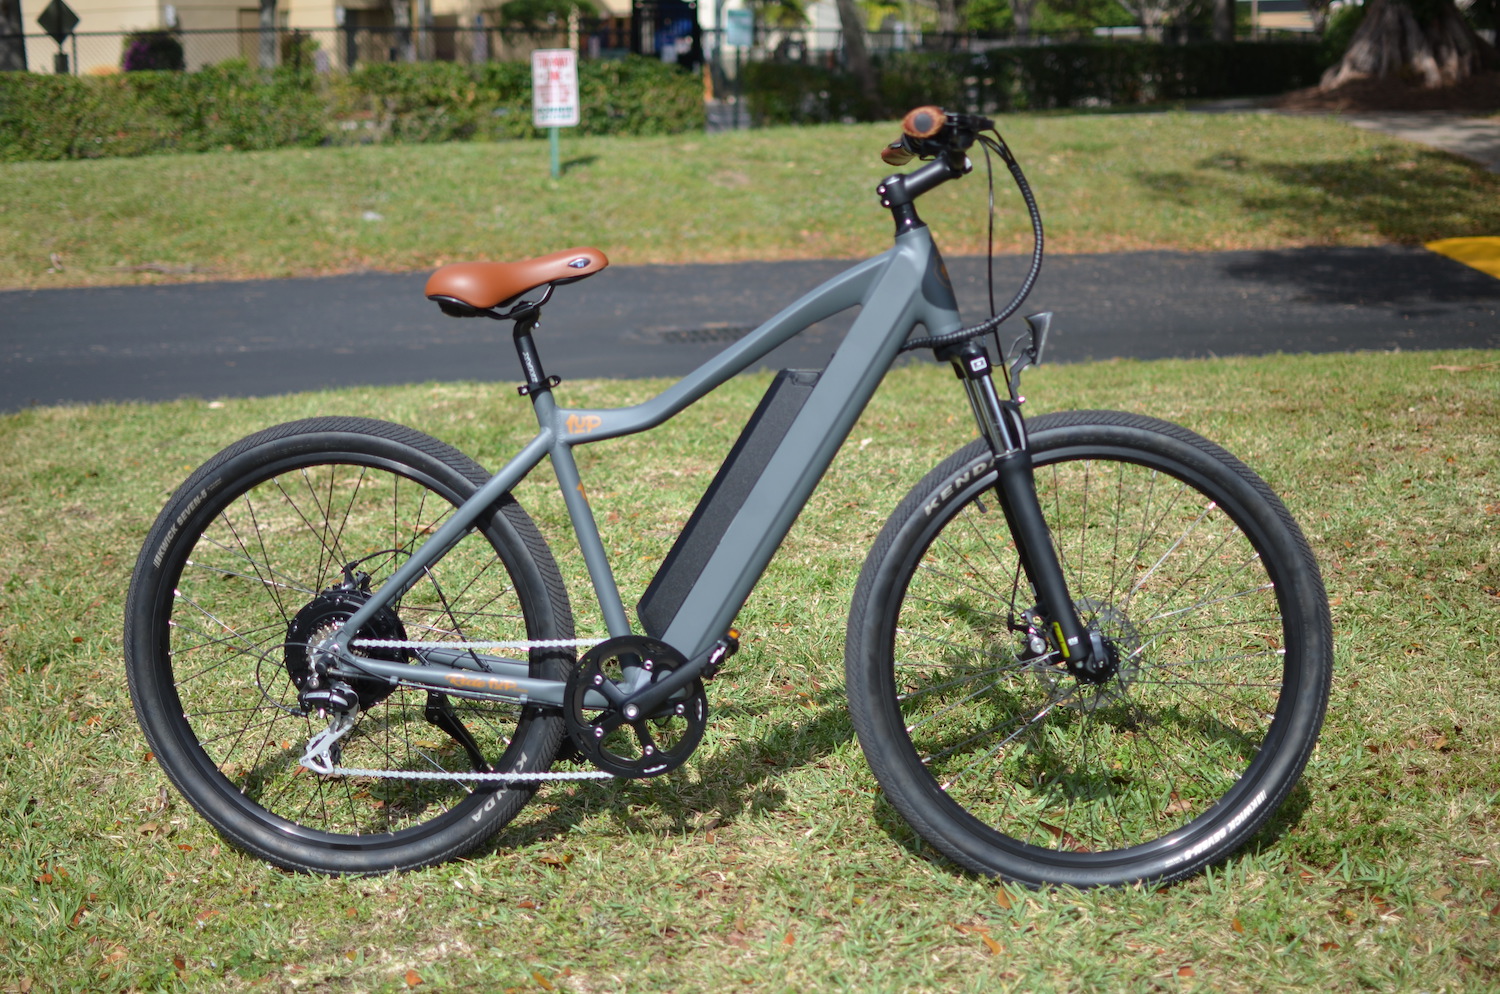 budget electric bike